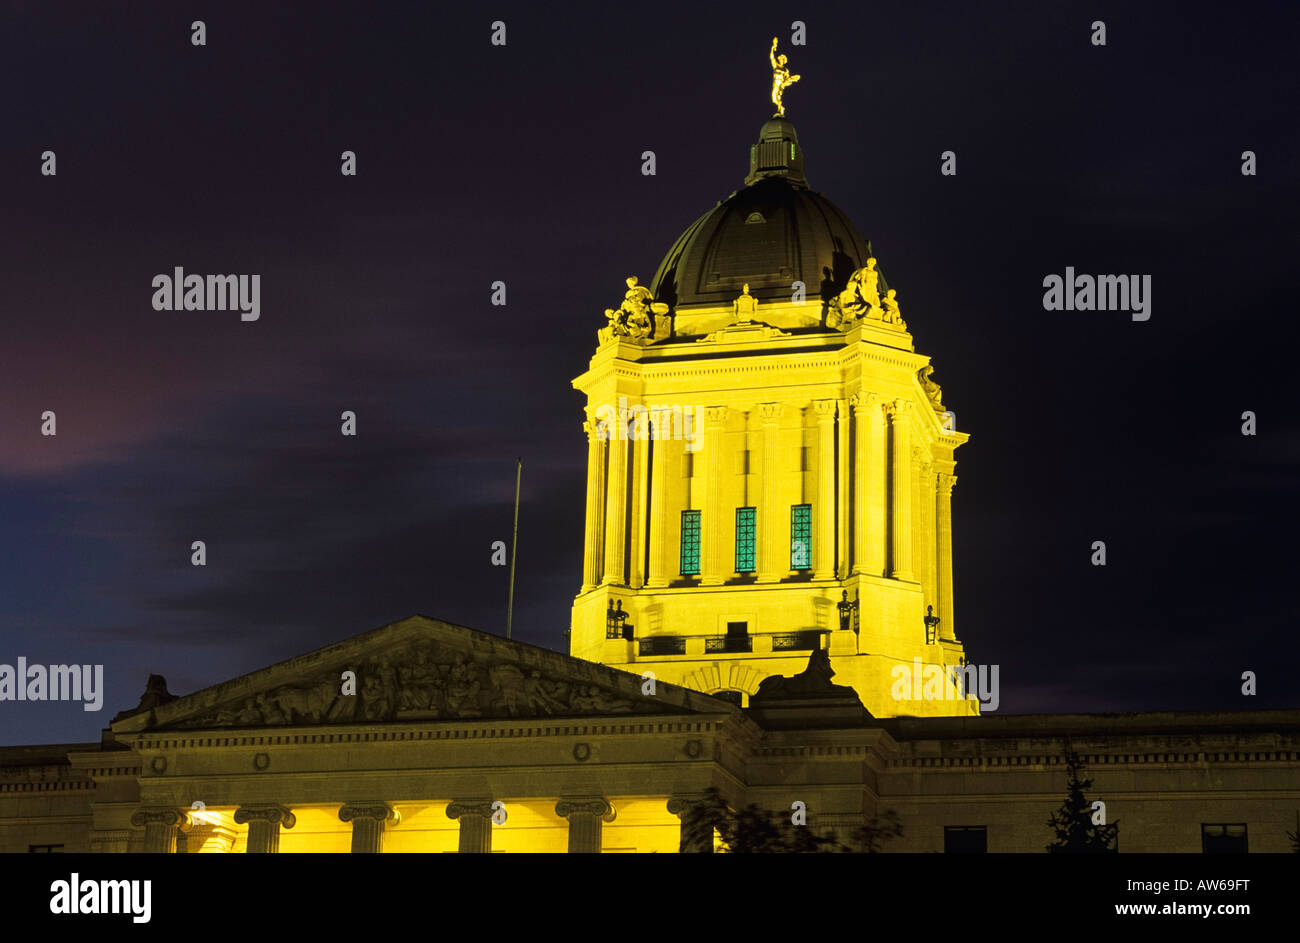 Dome of Manitoba Legislative Building at night, Winnipeg, Manitoba, Canada Stock Photo